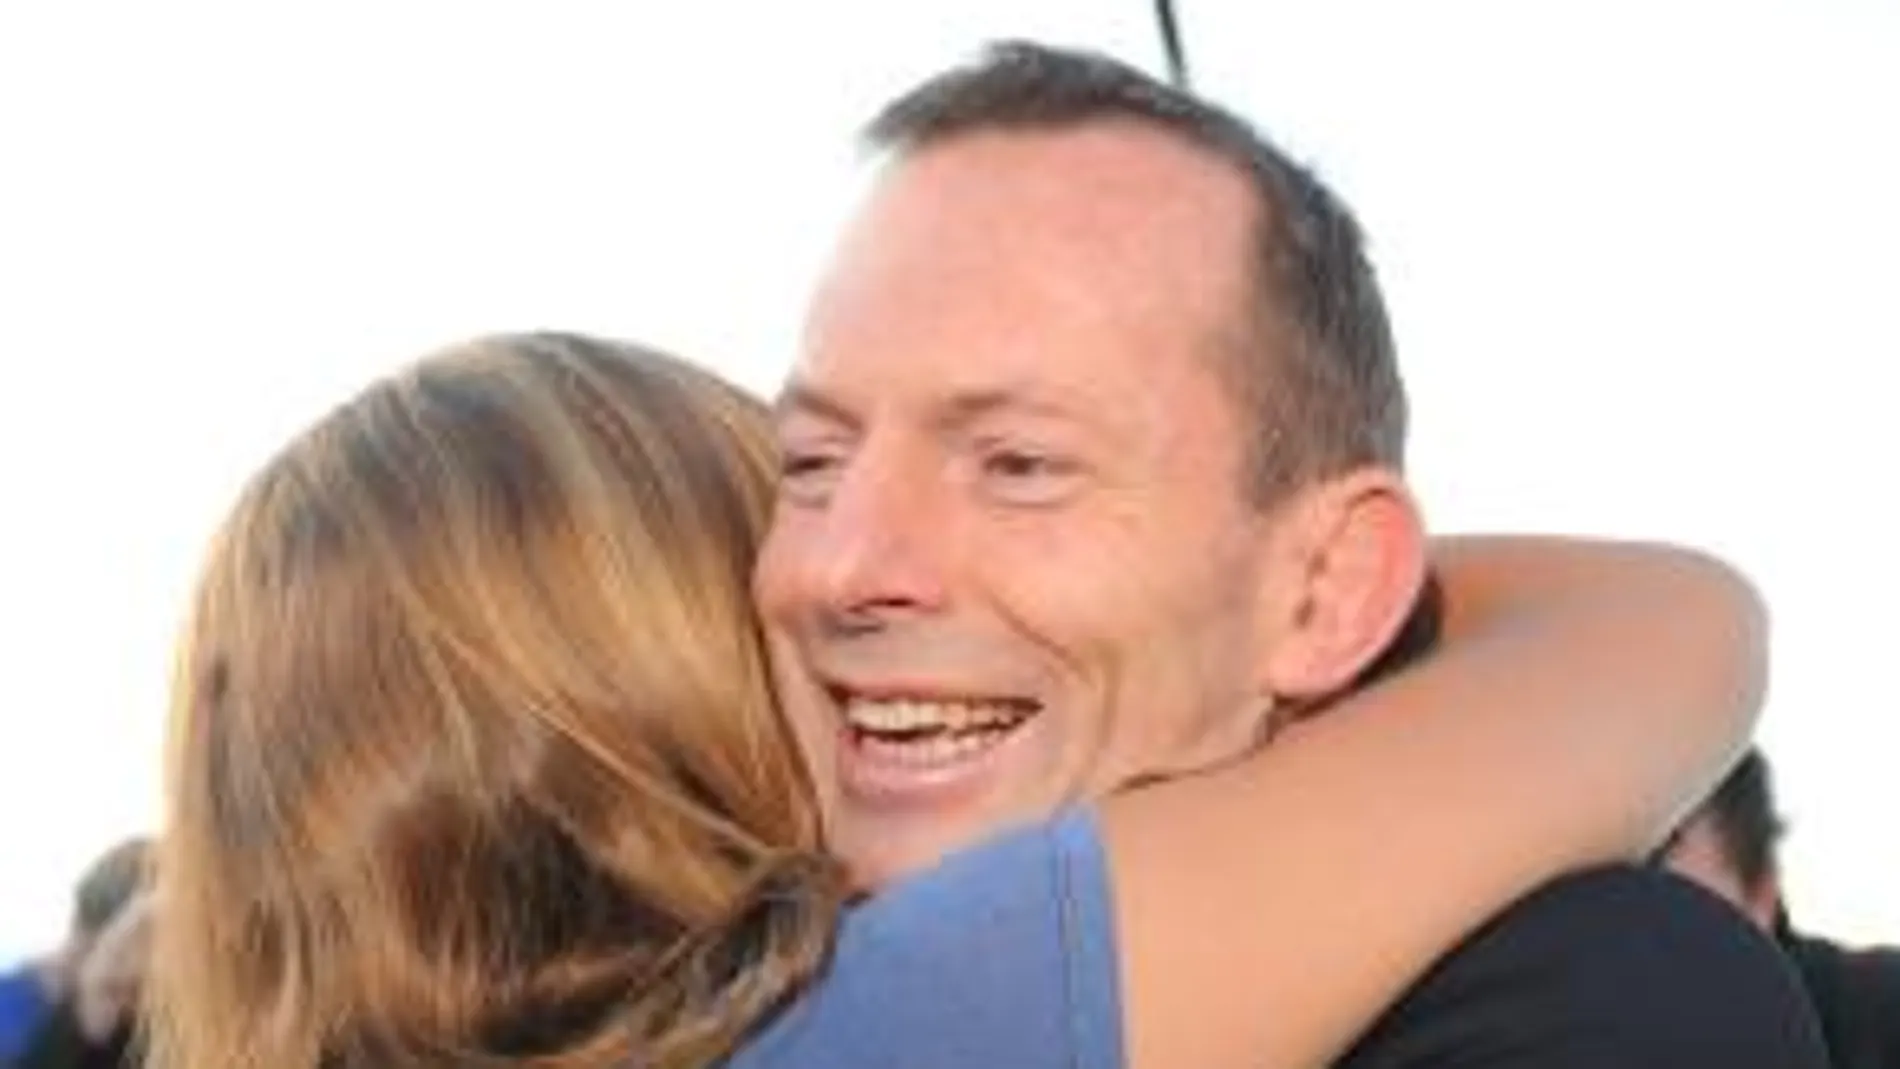 Tony Abbott, líder opositor, se abraza a su hija tras depositar su voto